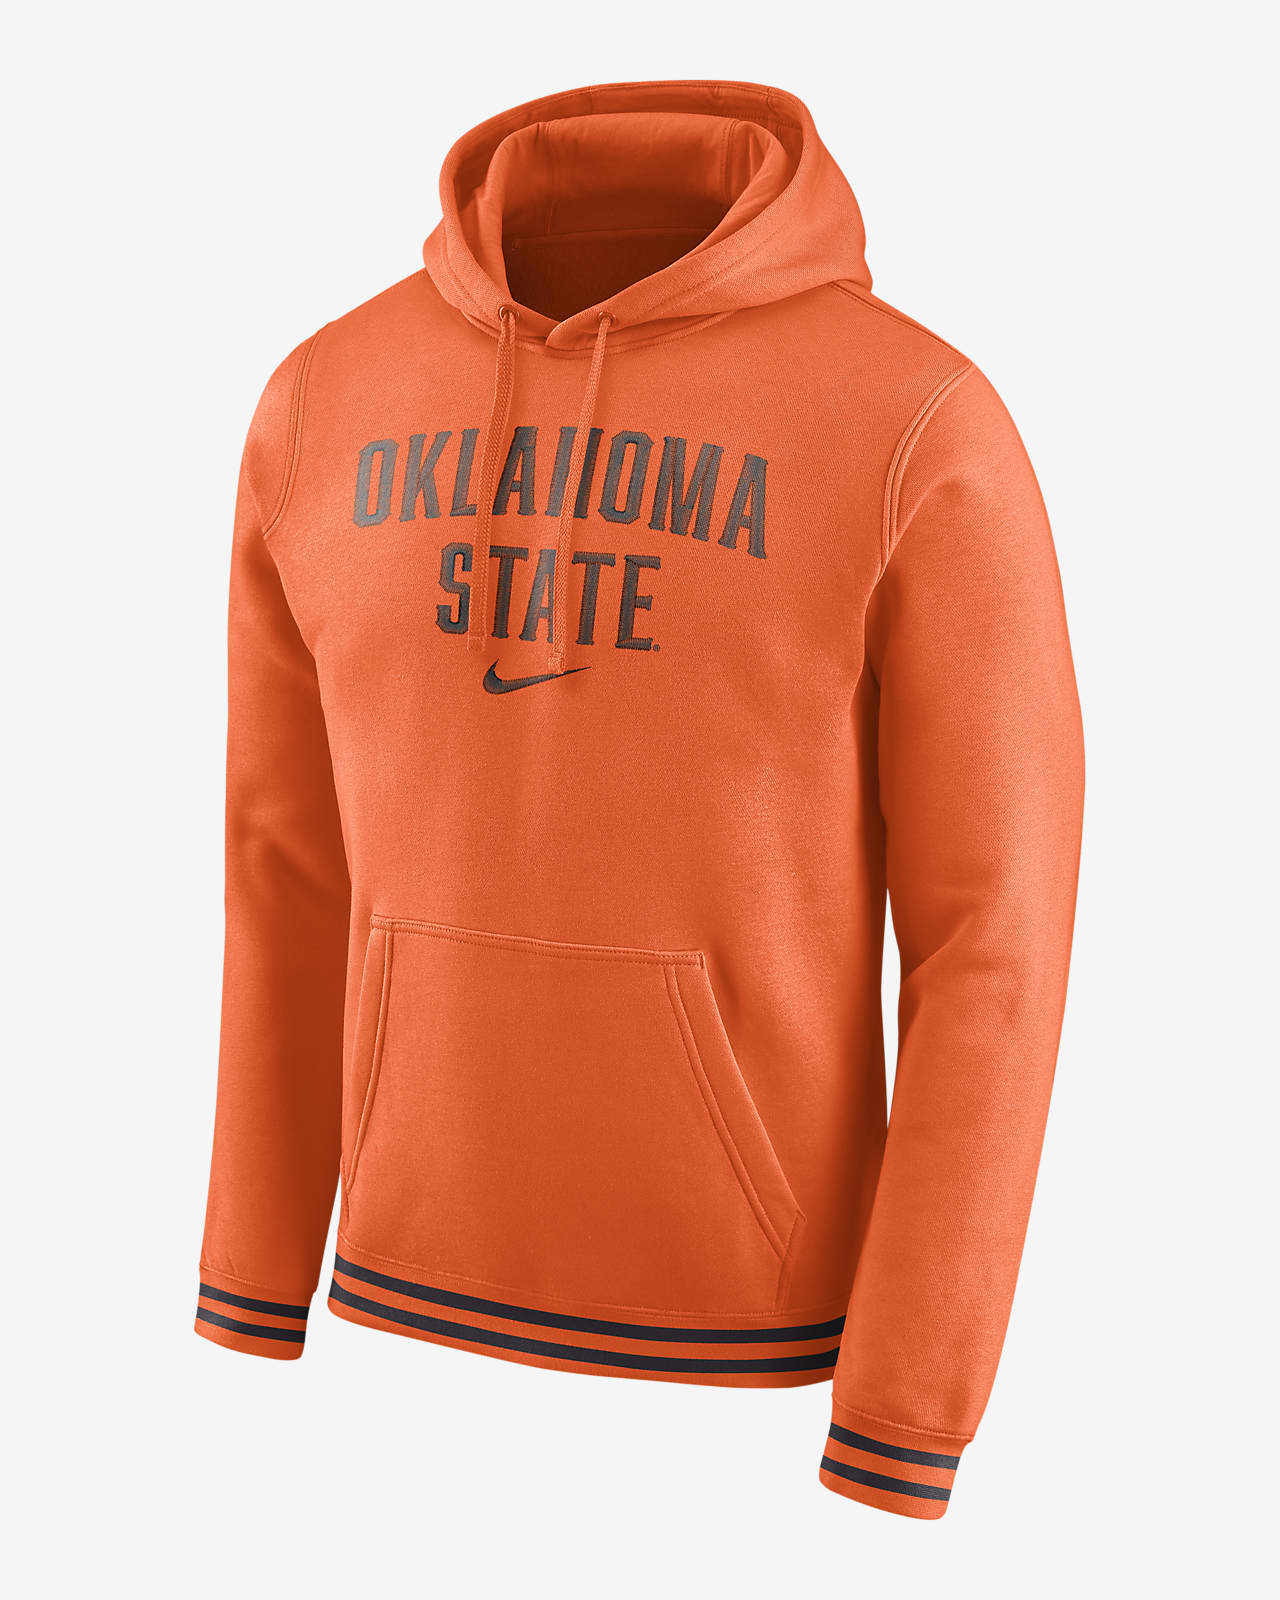 Nike Retro (Oklahoma State) Men's Fleece Hoodie. Nike.com